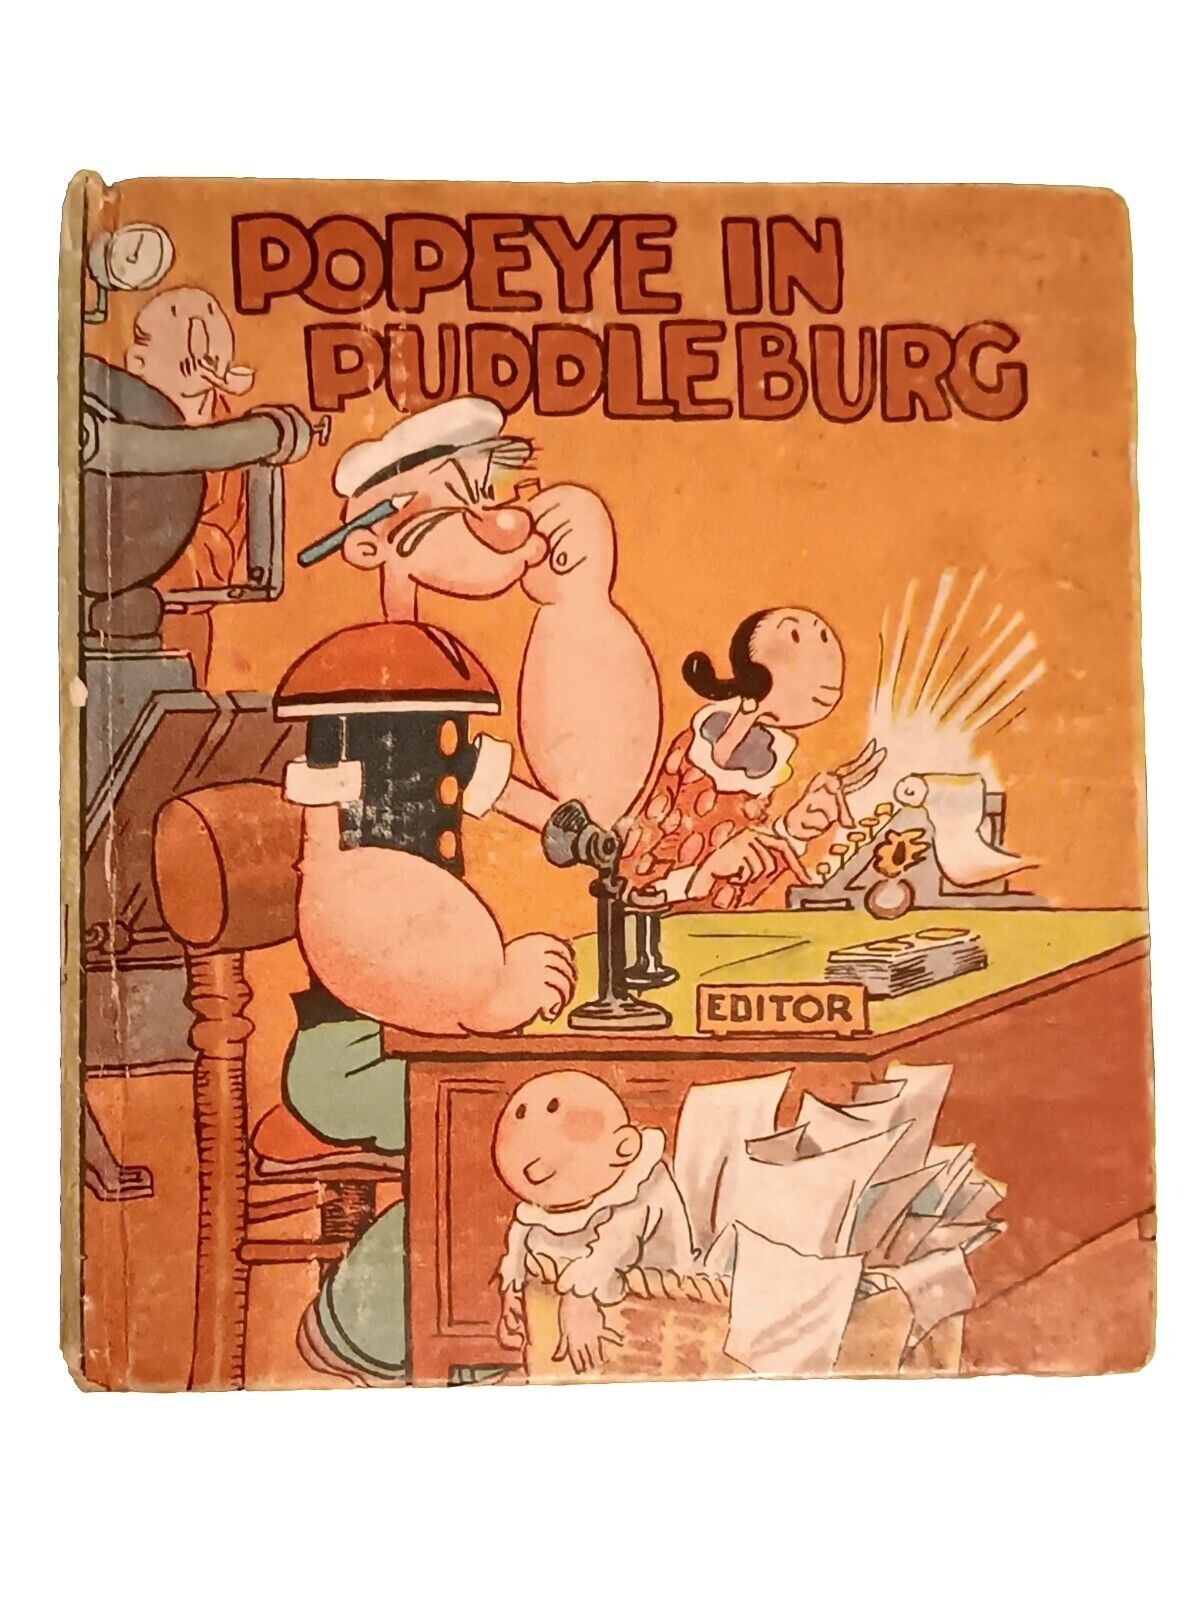 1934 POPEYE IN PUDDLEBURG LITTLE BIG BOOK SERIES KING FEATURES E.C SEGAR #1088